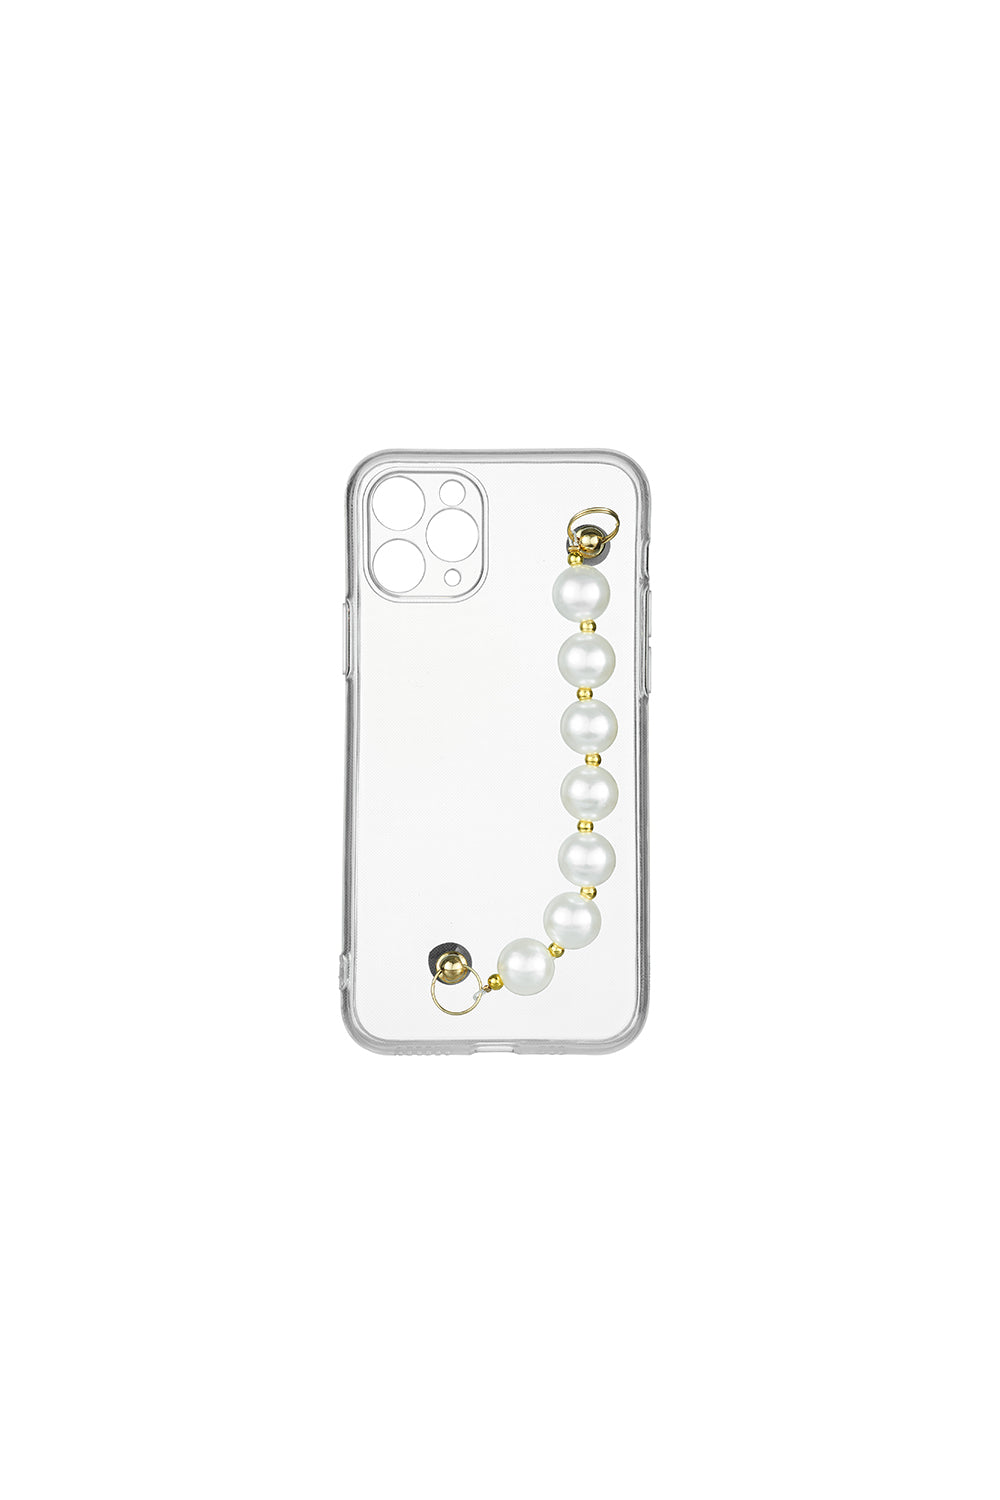 Pearl chain clear iPhone case(パールチェーンクリアアイフォンケース)